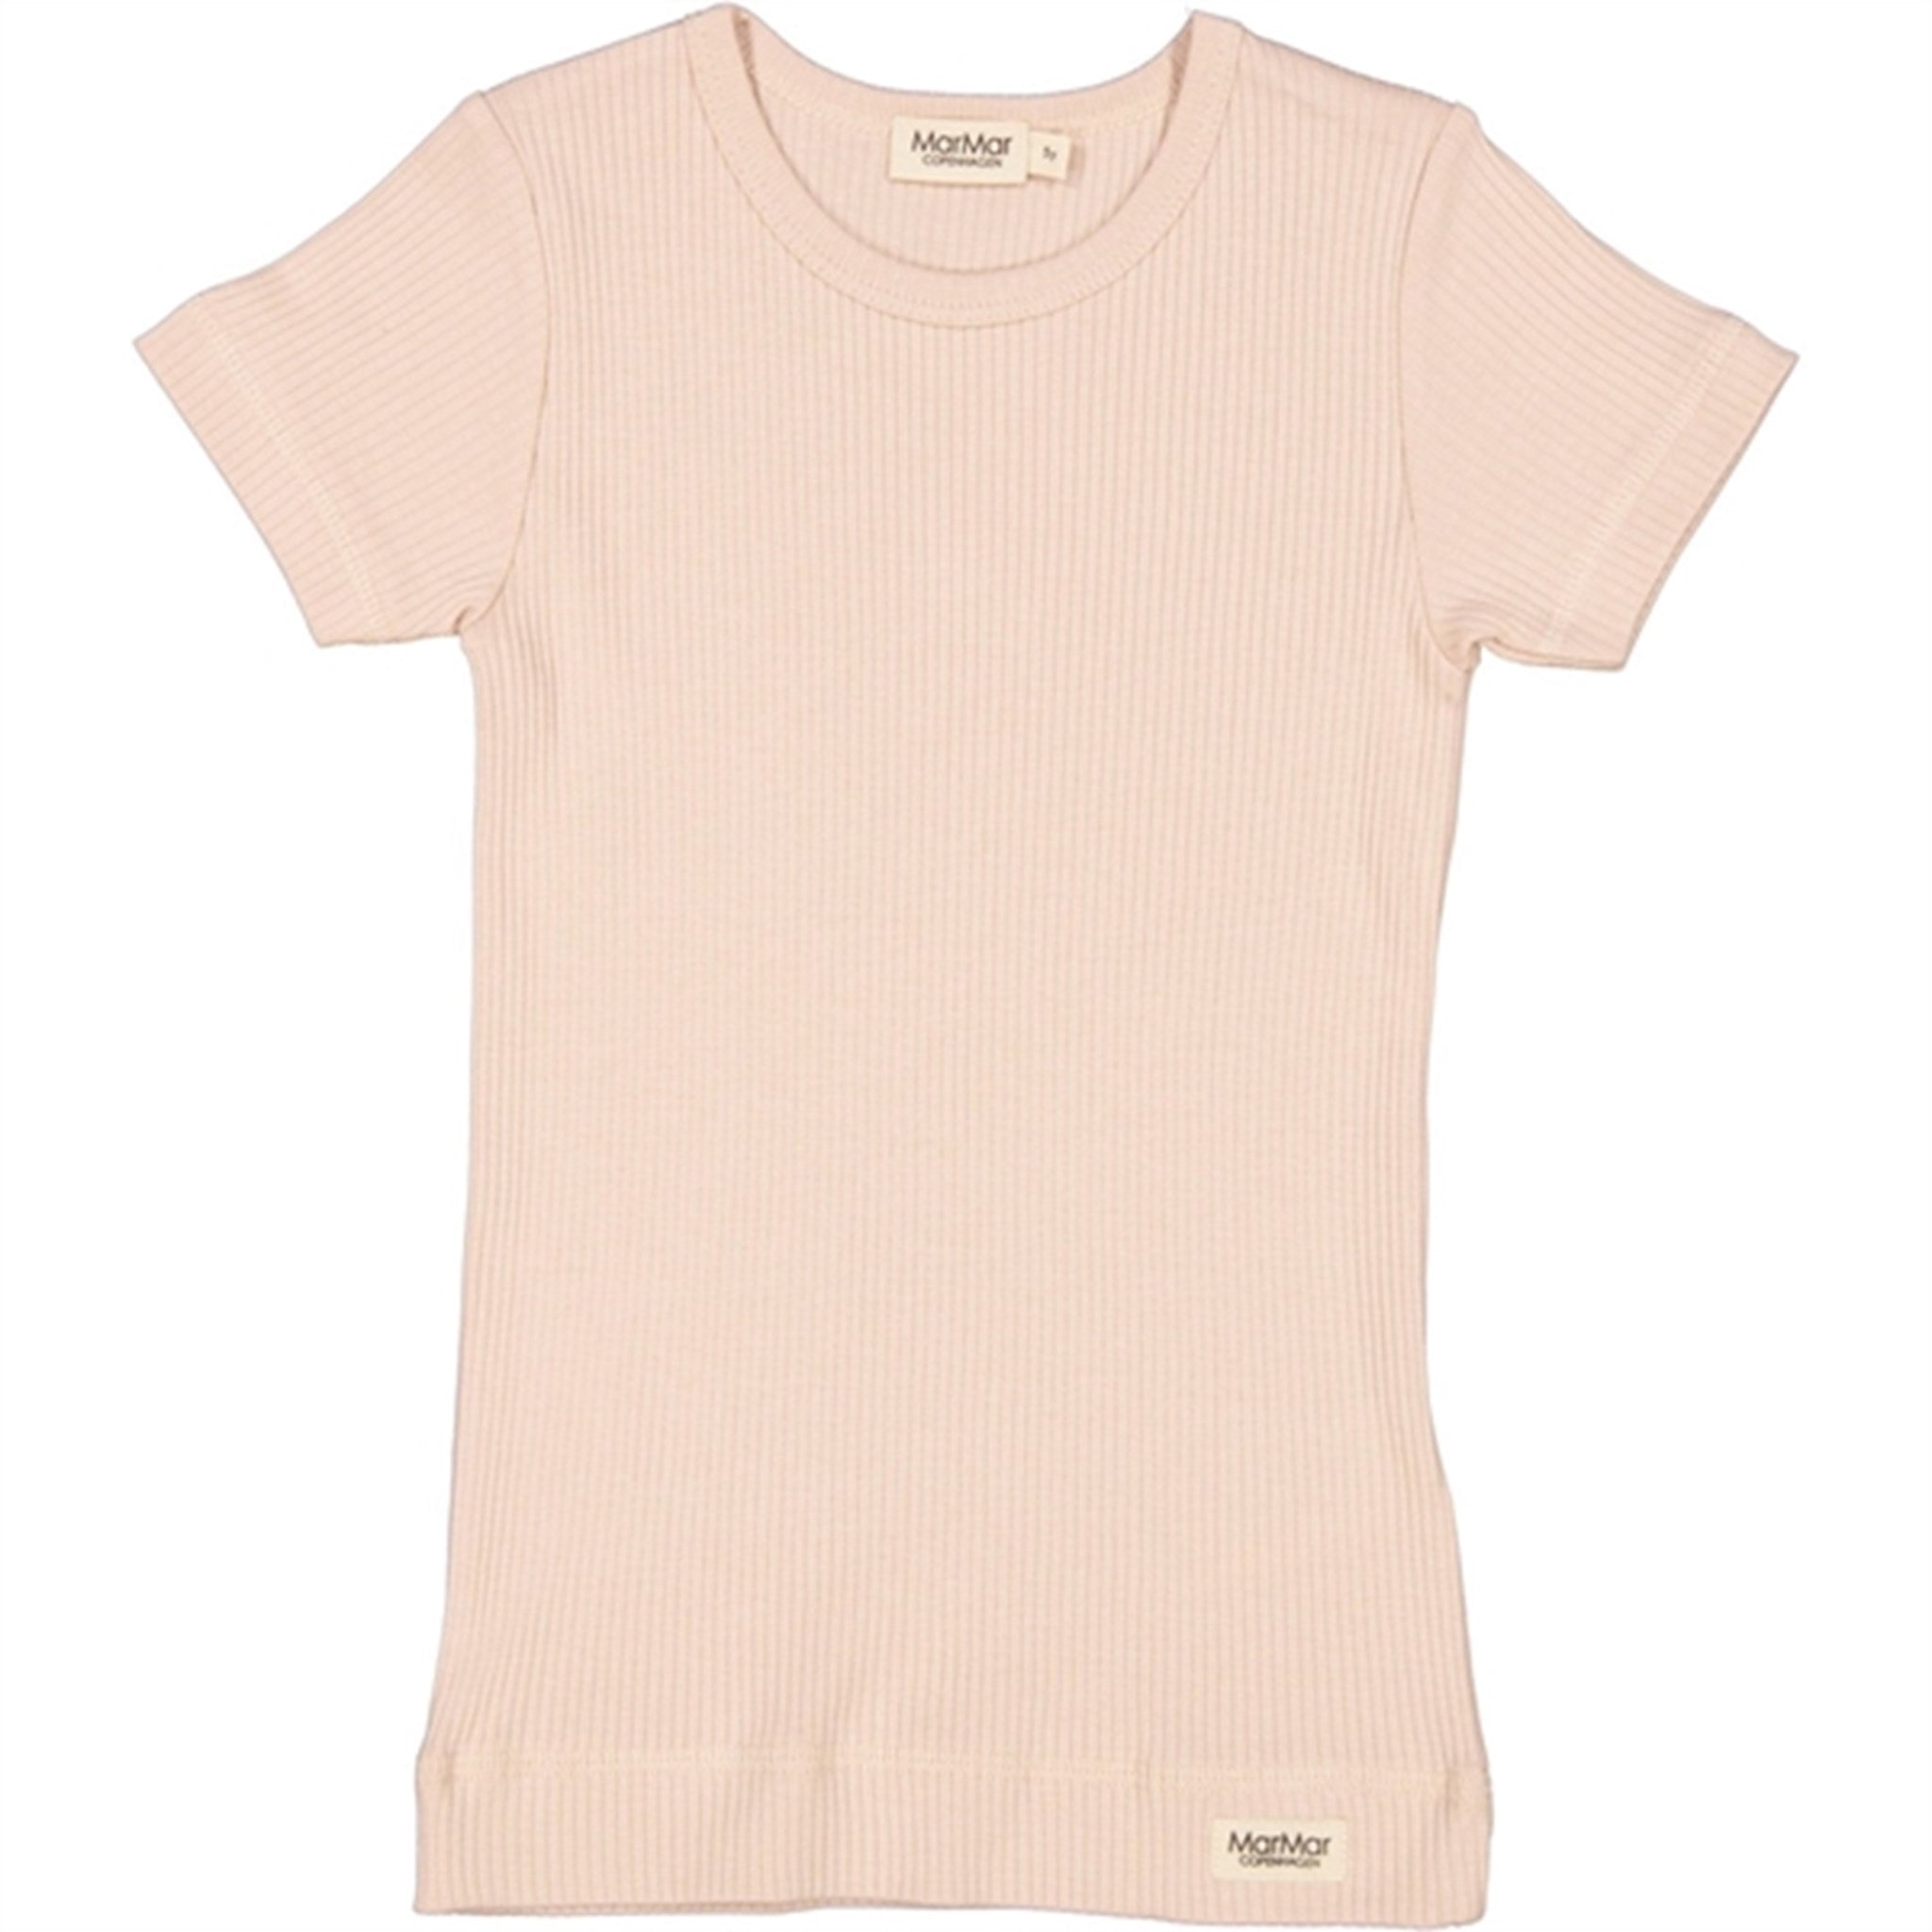 MarMar Modal Rose Moon T-shirt Plain